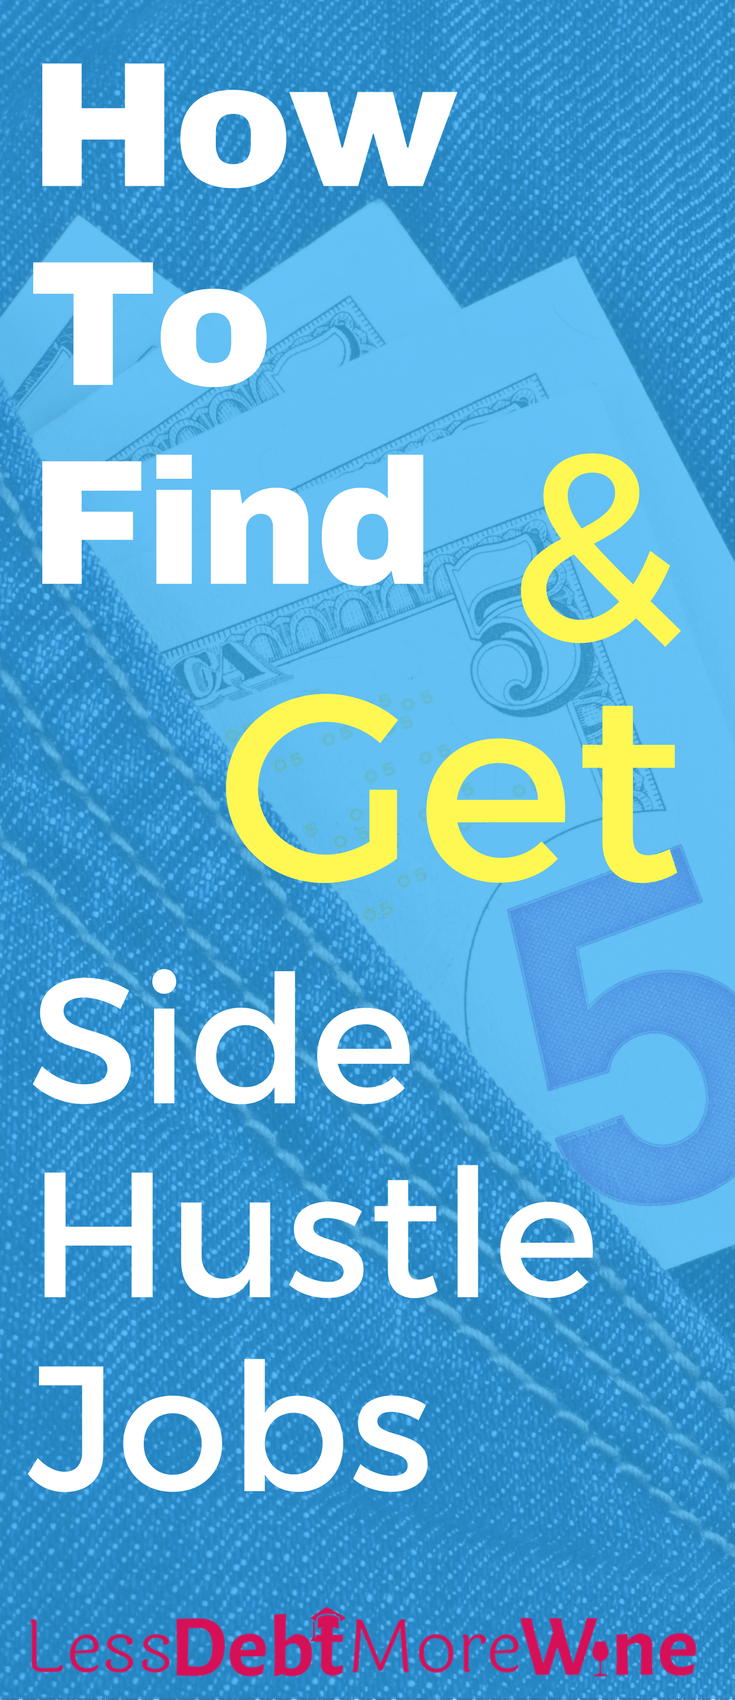 personal finance tips | millennial money tips | side hustle | earn extra money | make extra cash